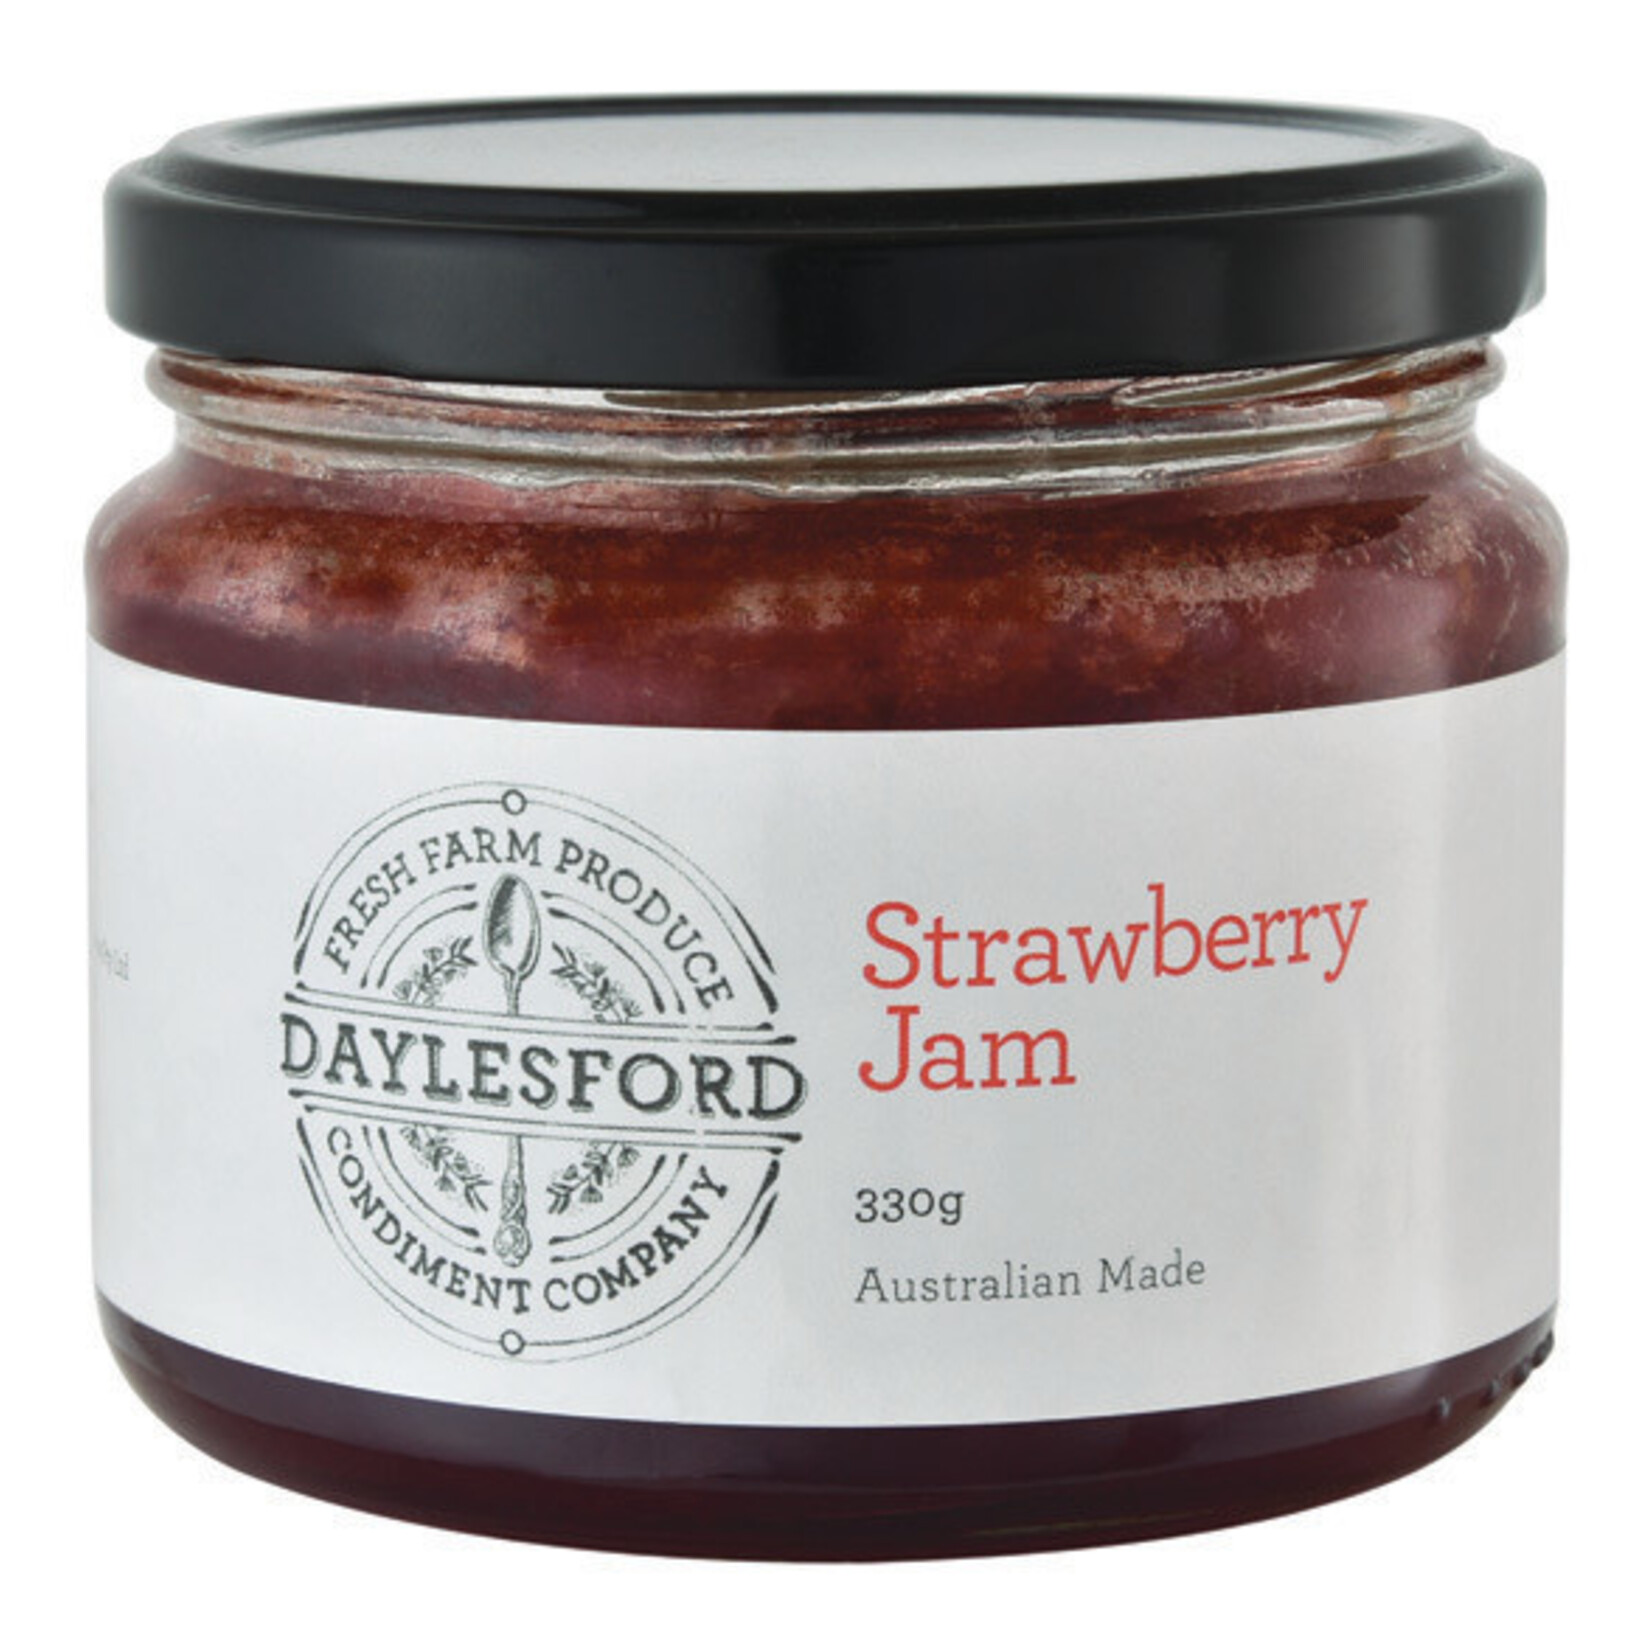 Daylesford Jam Strawberry 330g